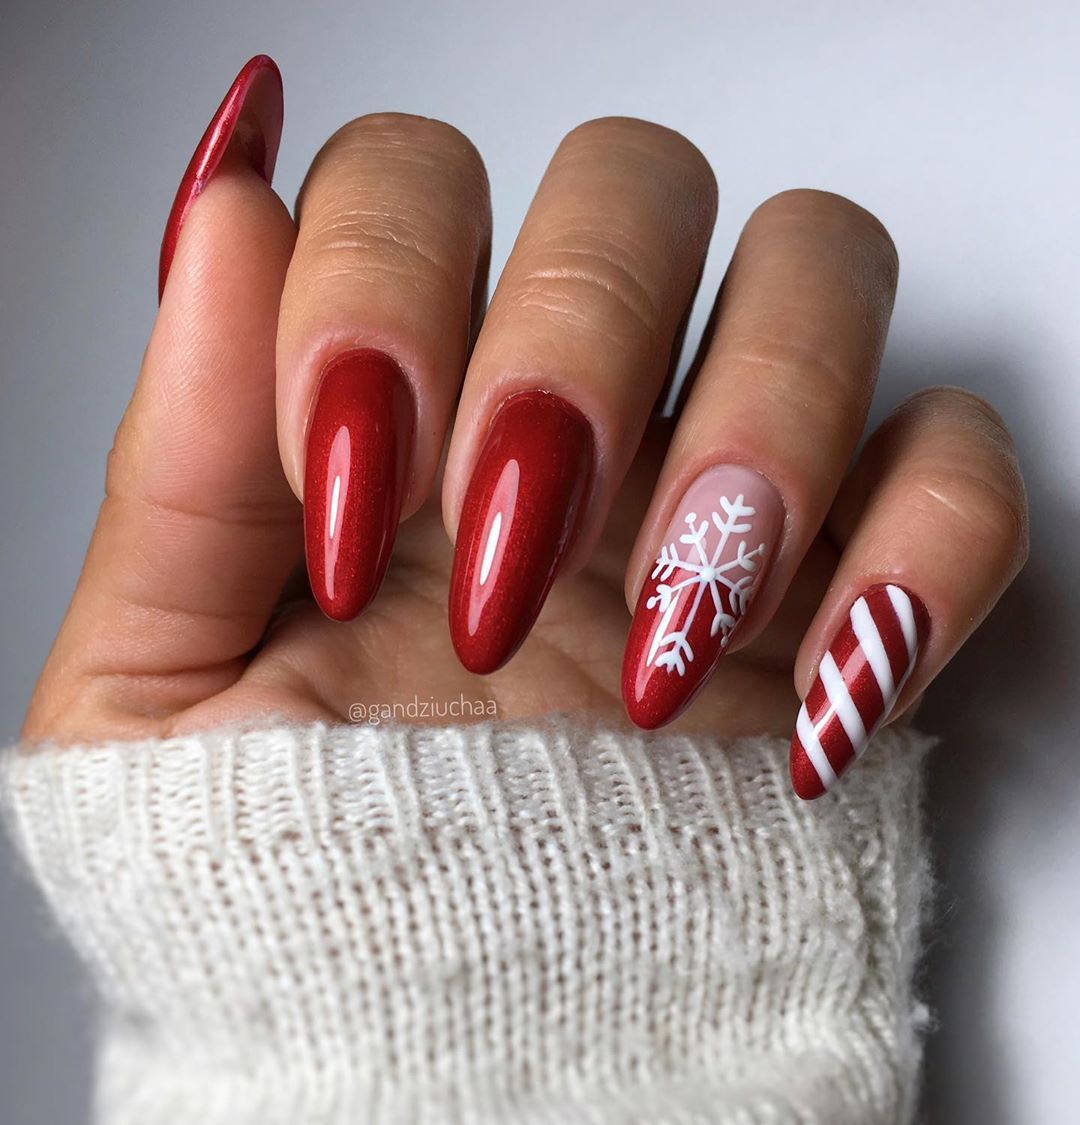 Indigo Designer On Instagram Nails Mani Hybridnails Indigonails Indigodesigner Christmasnails Winternails Nailart Rednails Nailsinsp Nail Art Nails Mani